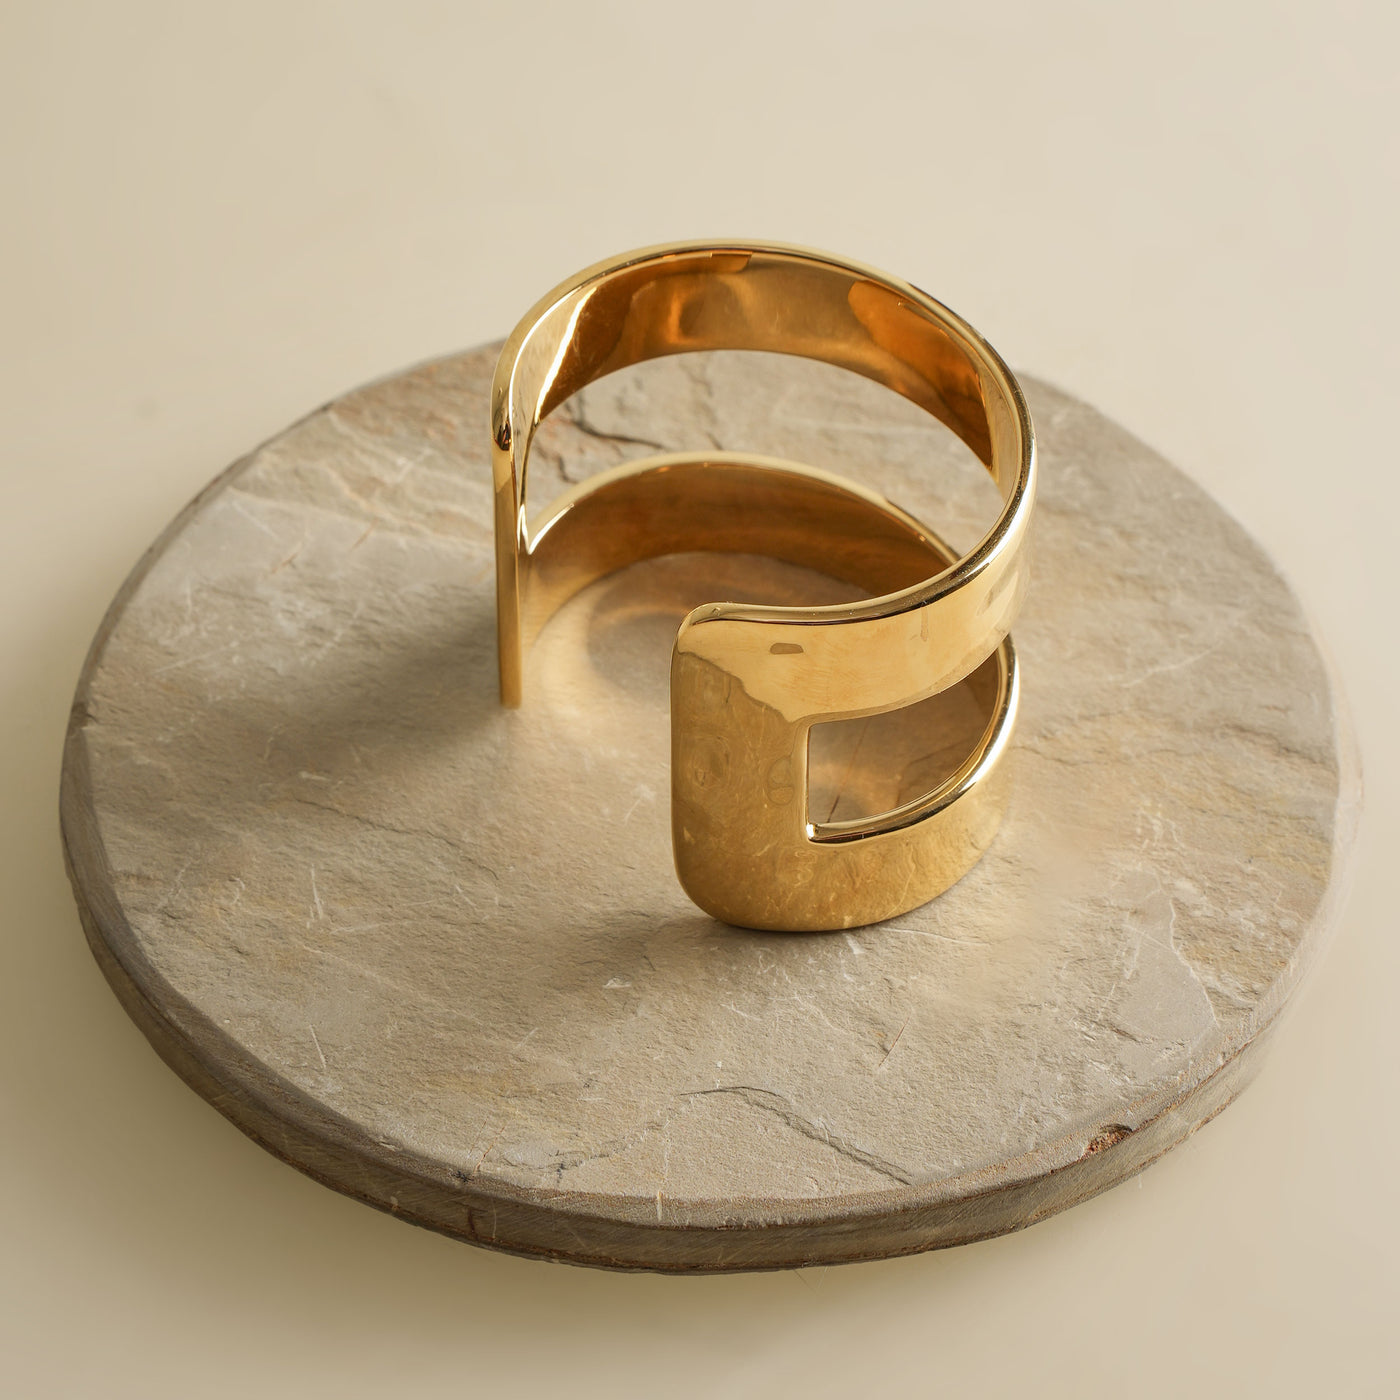 SAINT LAURENT polished gold cuff bracelet